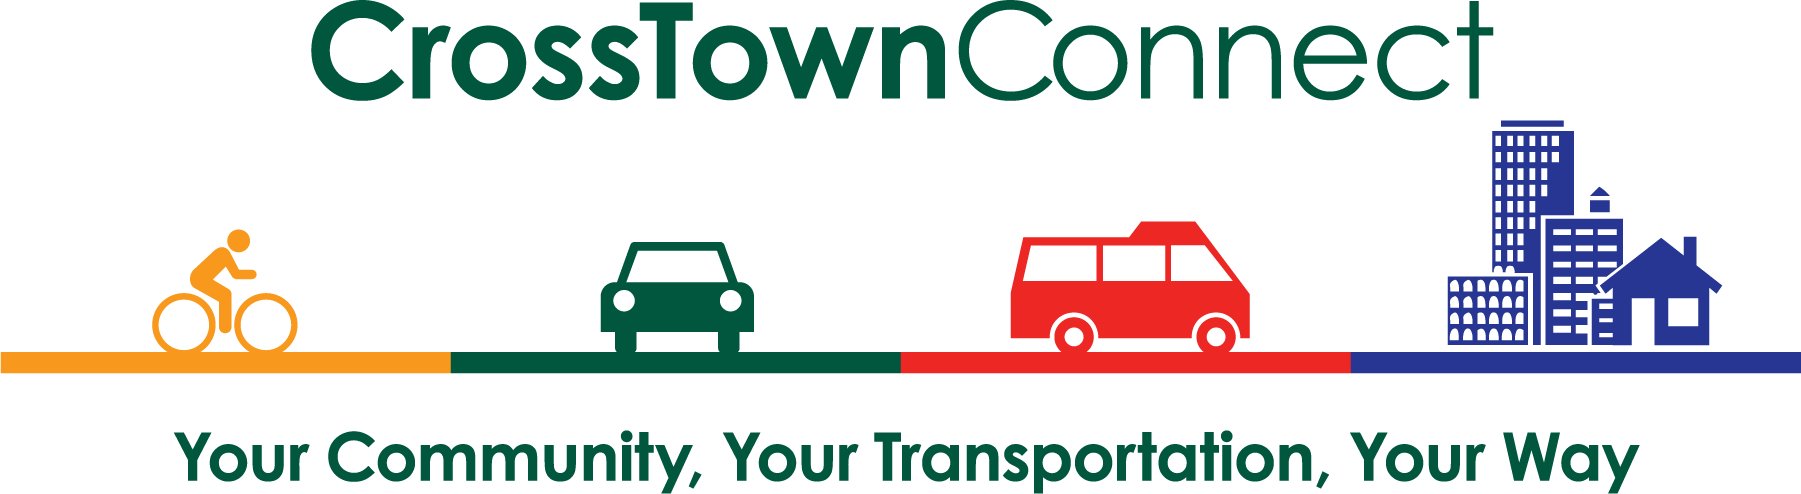 crosstown-connect-tma-logo